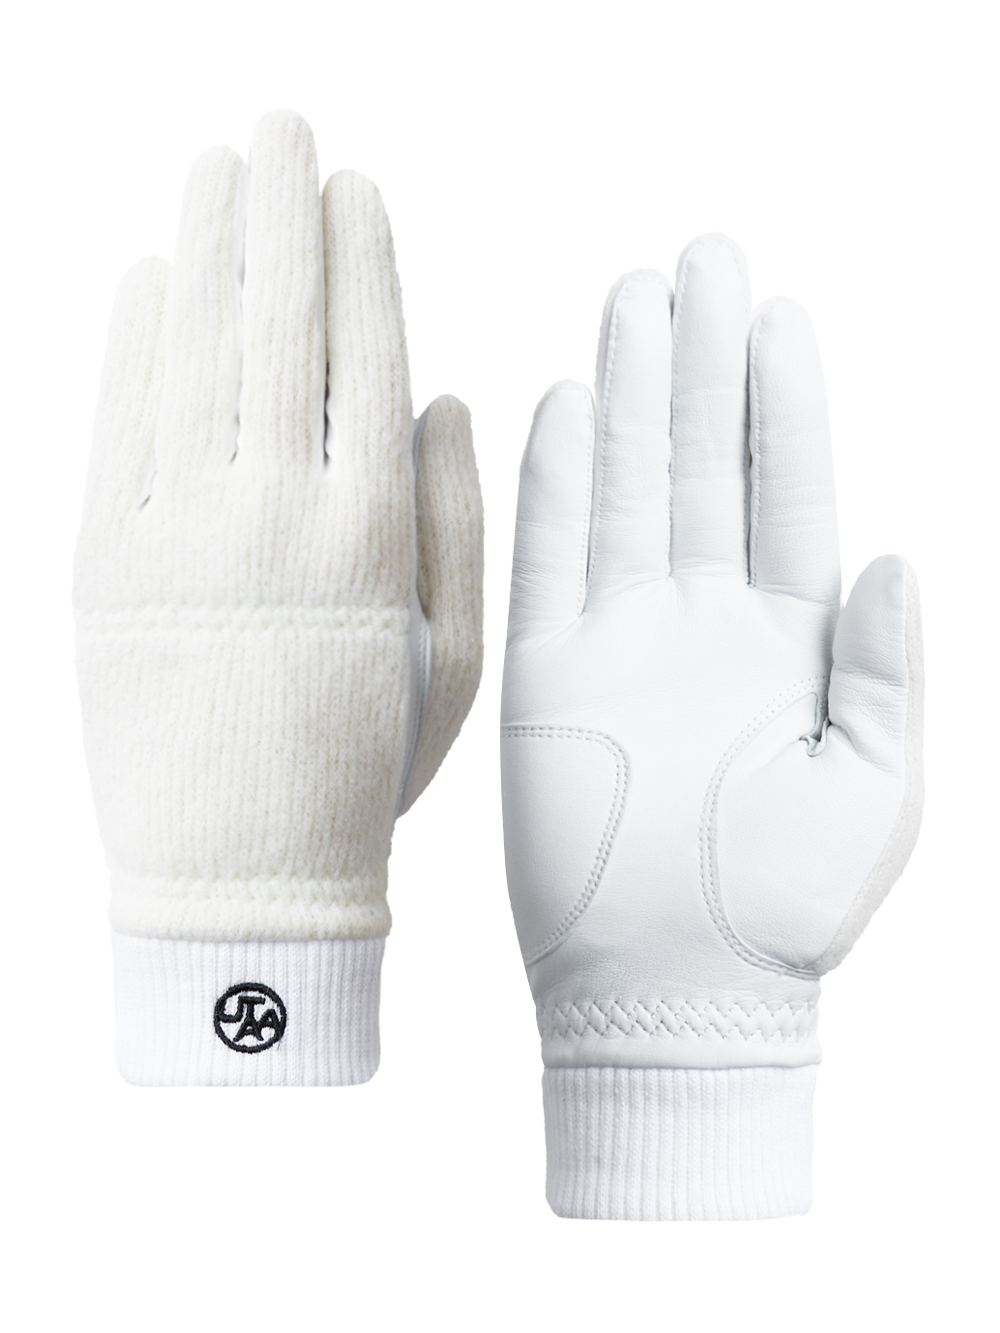 UTAA Mild Knit Golf Glove : Men&#039;s White(UC4GVM626WH)